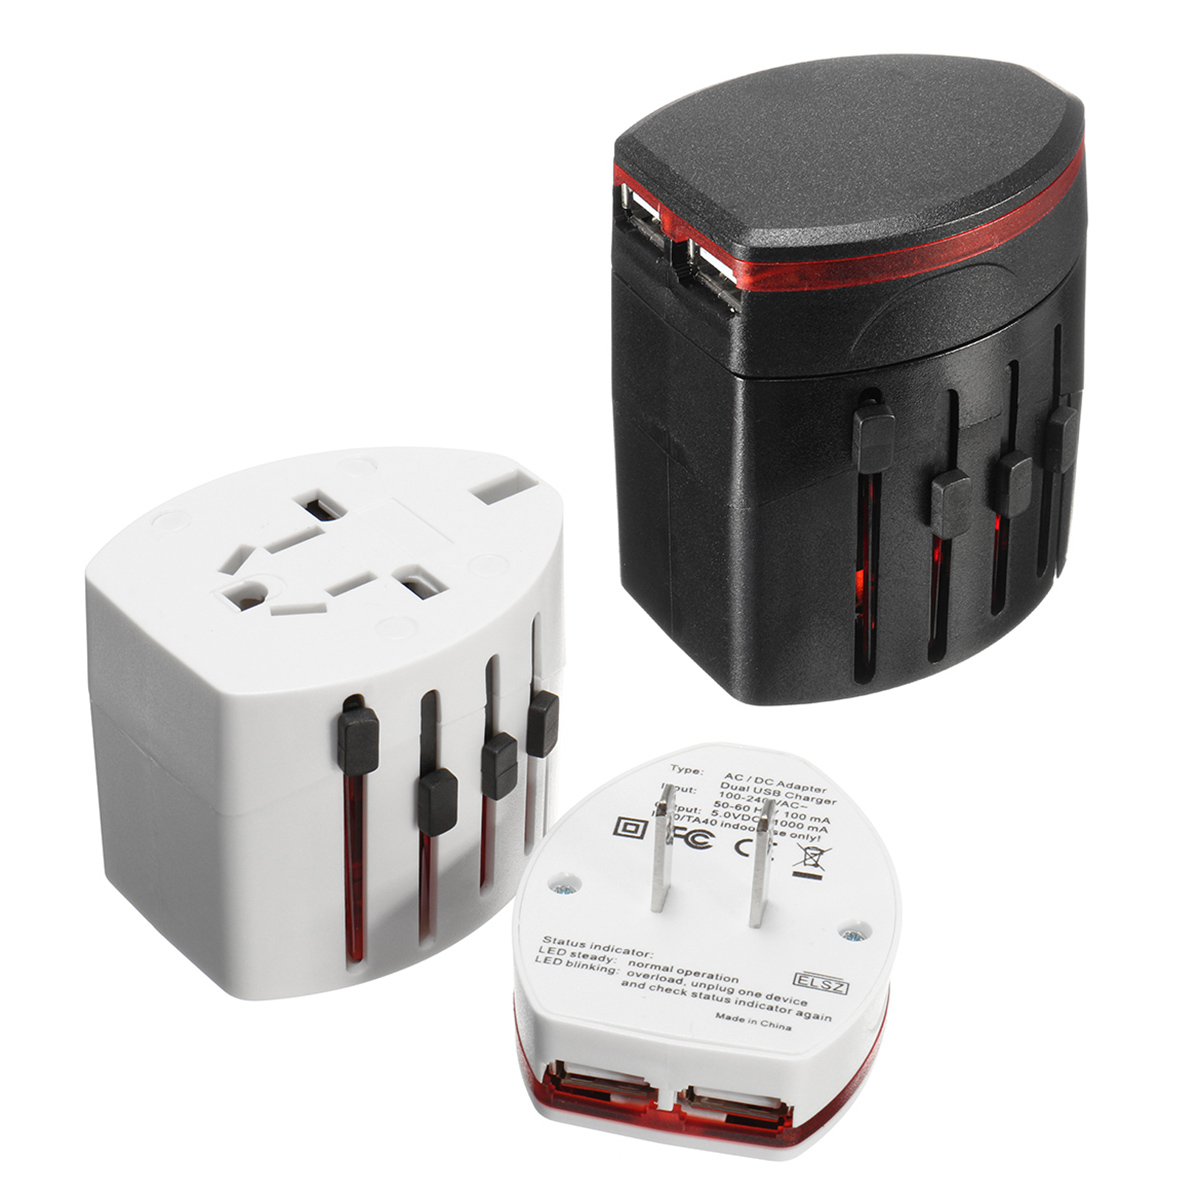 

Universal Travel AC Power Charger Adapter Converter AU/UK/US/EU Plug with 2 USB Ports